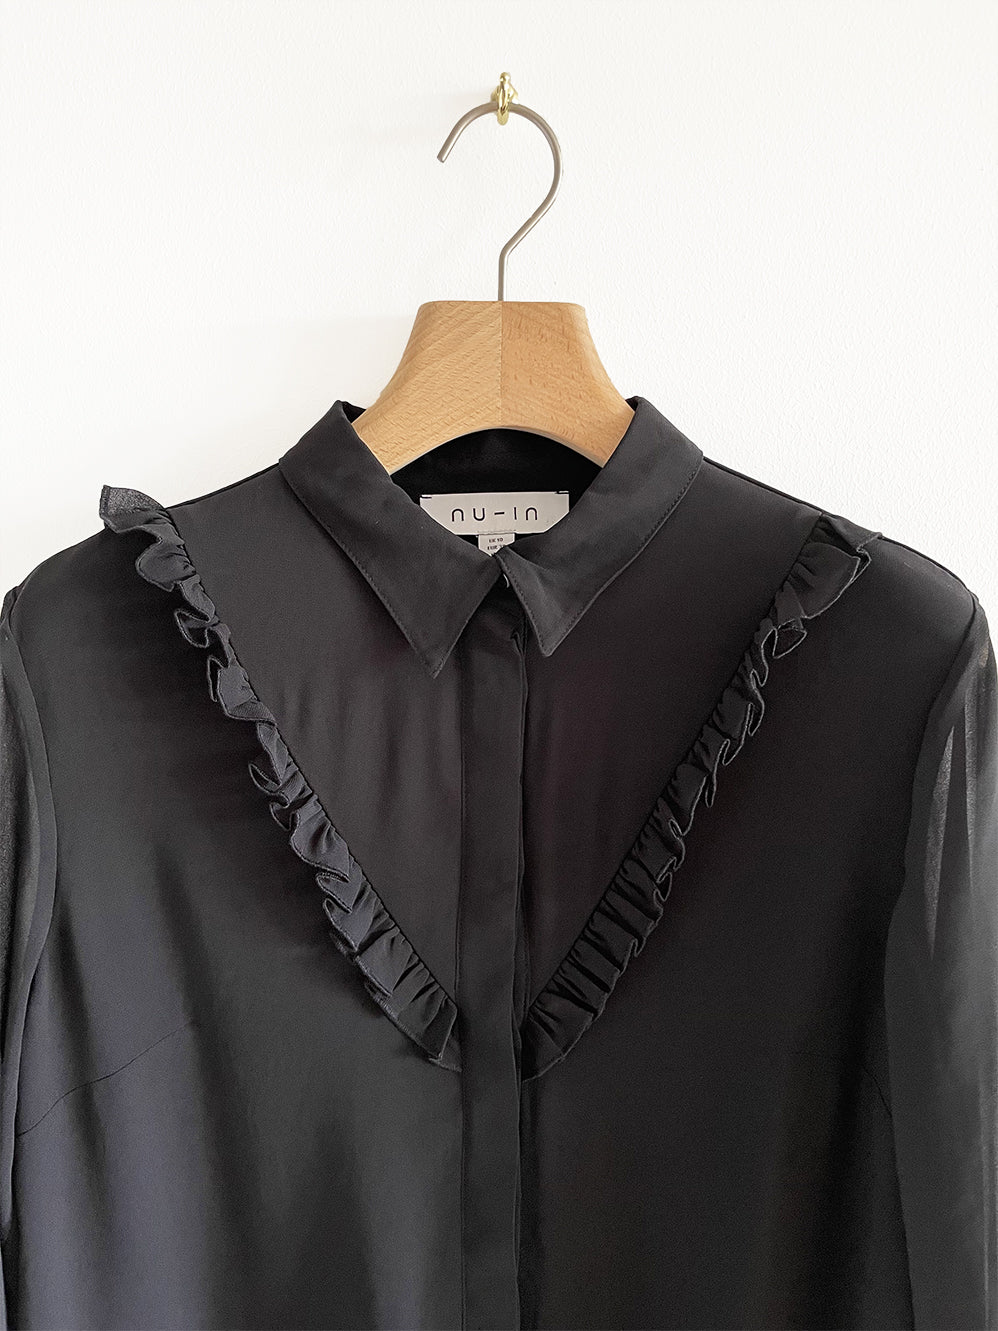 Black Shirt Dress with Riffle, Size S